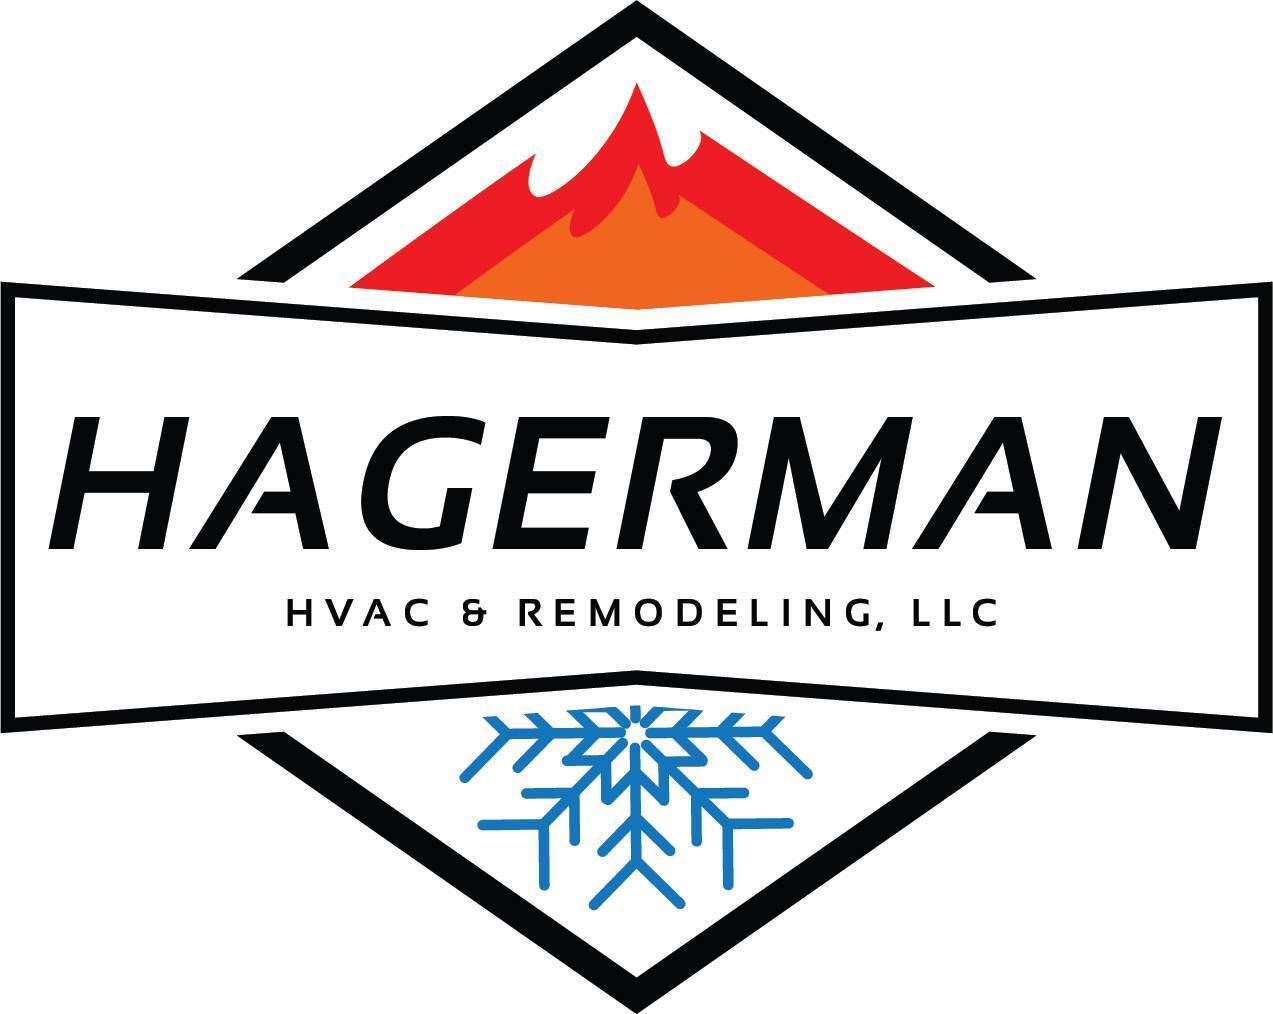 Hagerman HVAC